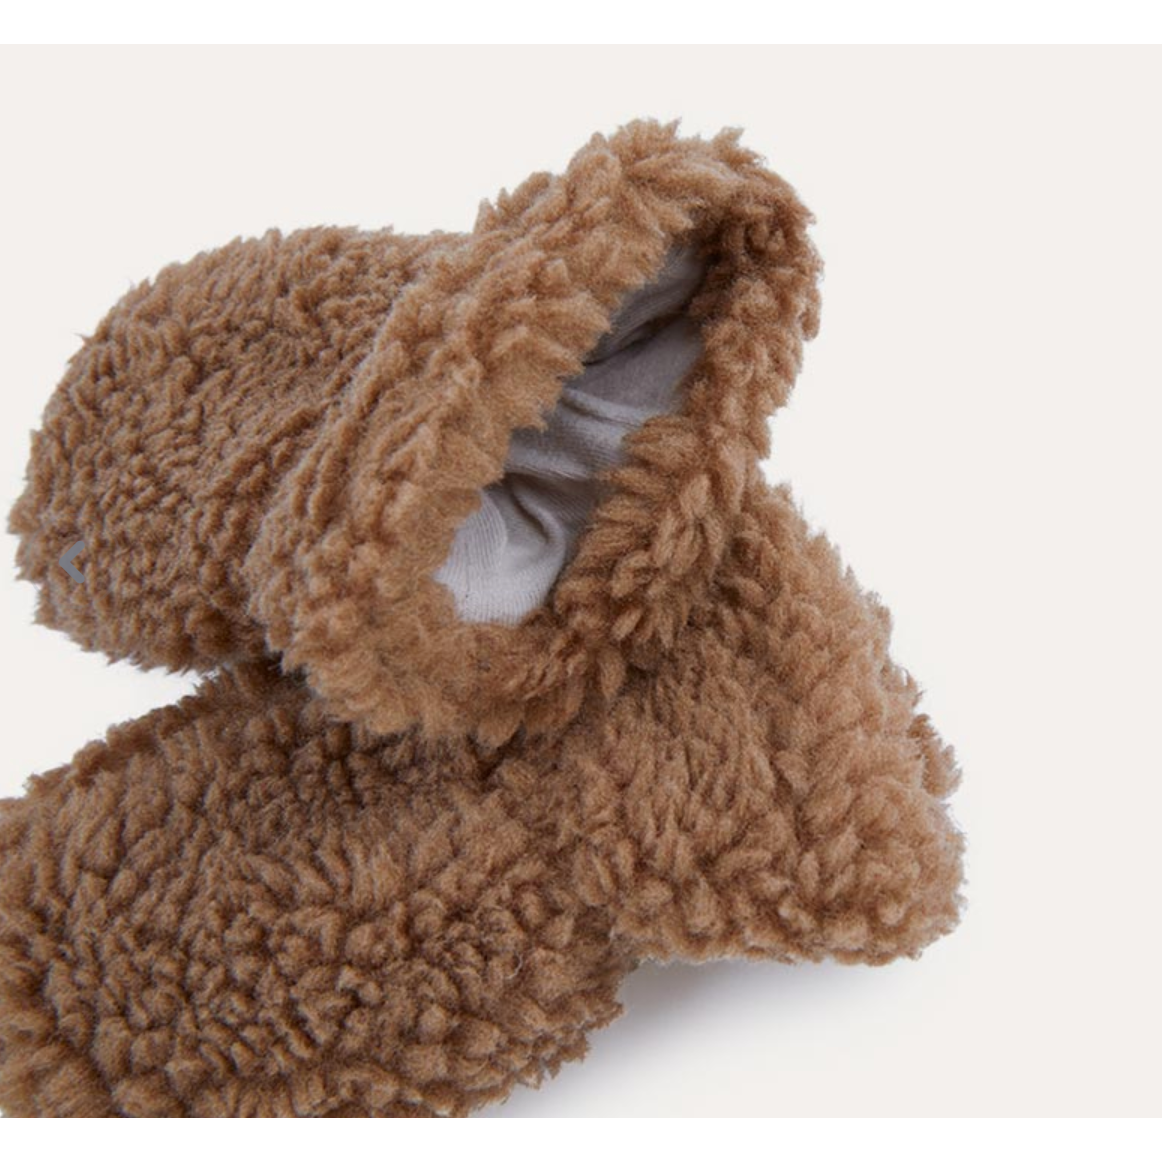 Mitones Grizz teddy baby mittens - Tobbaco brown